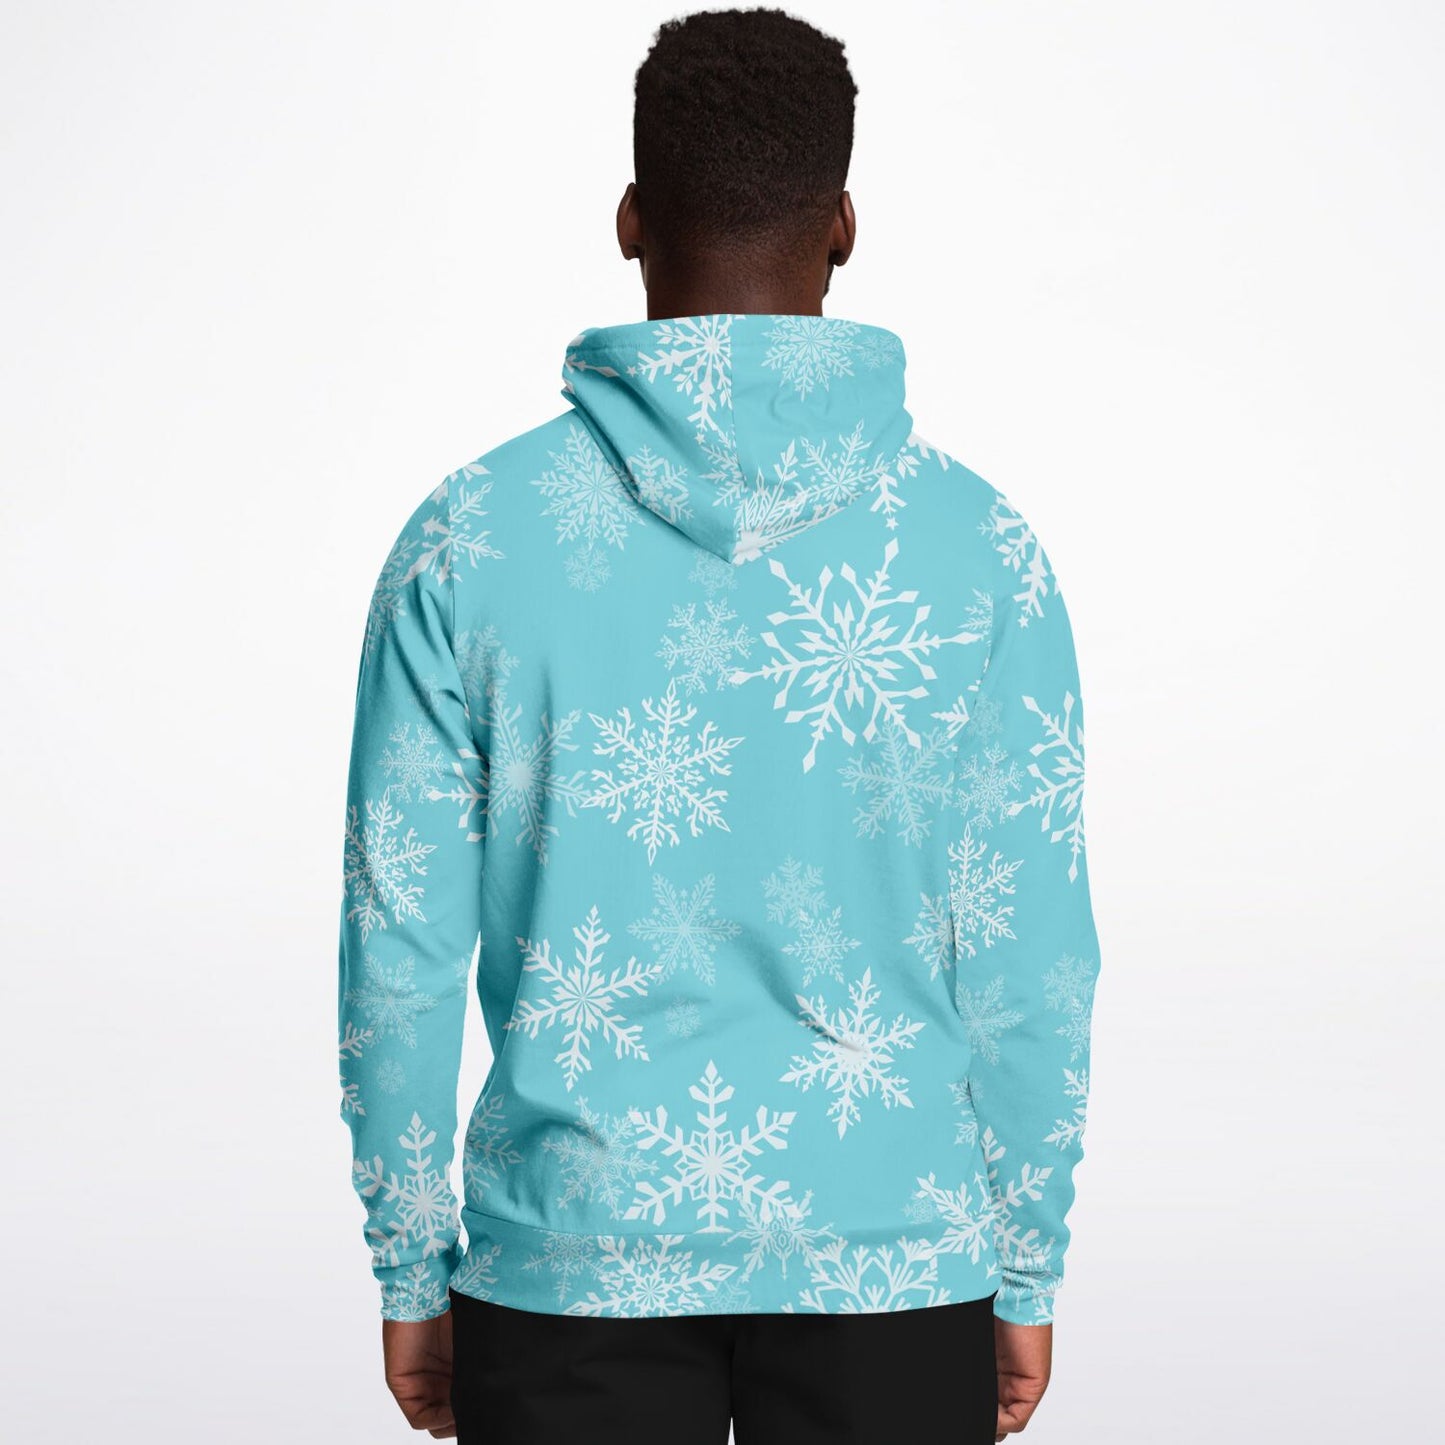 Athletic Hoodie, Snowflake Design, Snow Season, Christmas Season, Winter Season